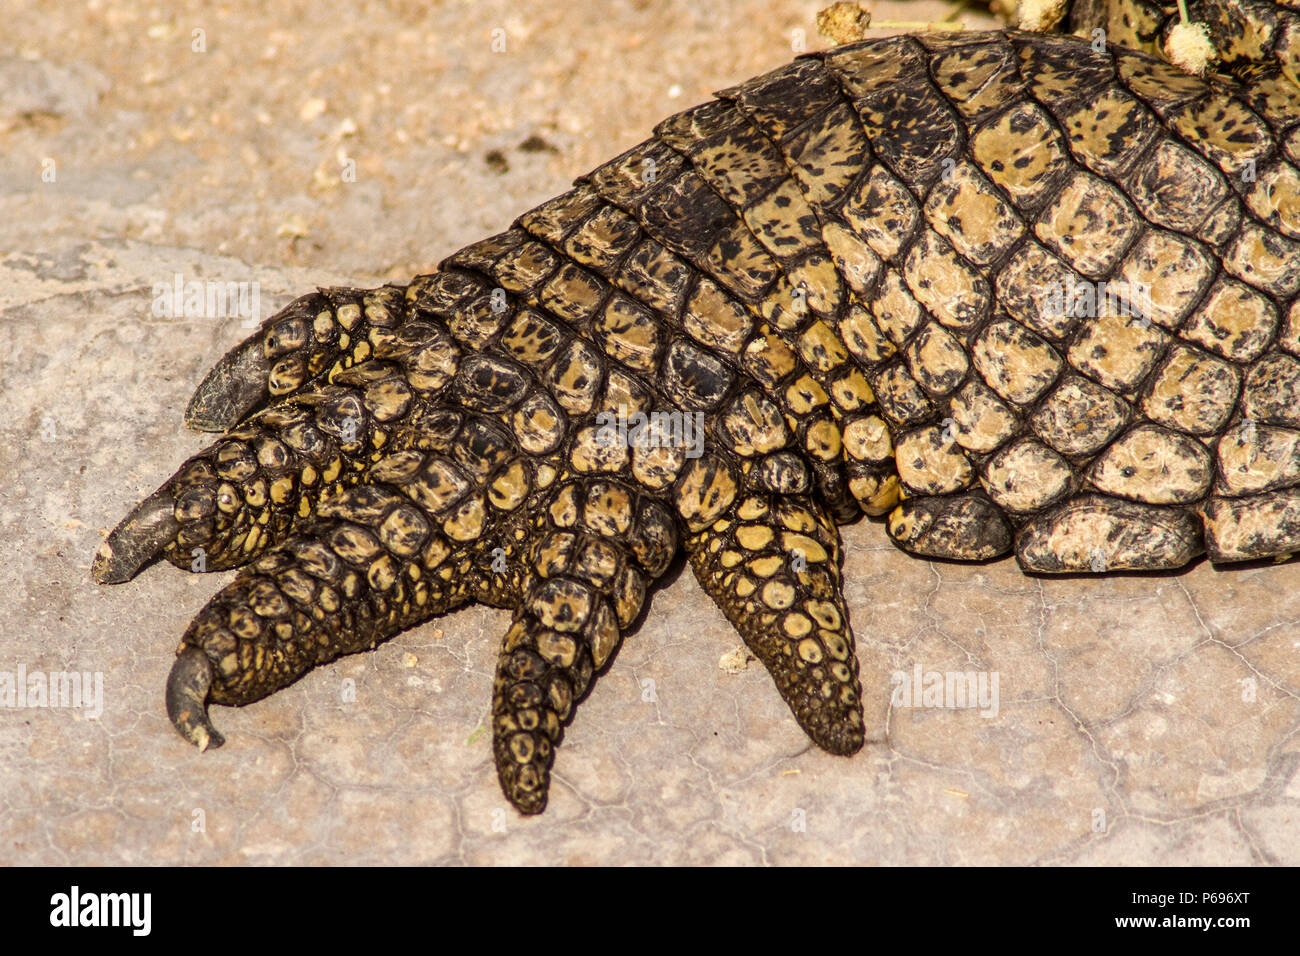 Nile Crocodile - Crocodylus Niloticus - close up of foot. Stock Photo